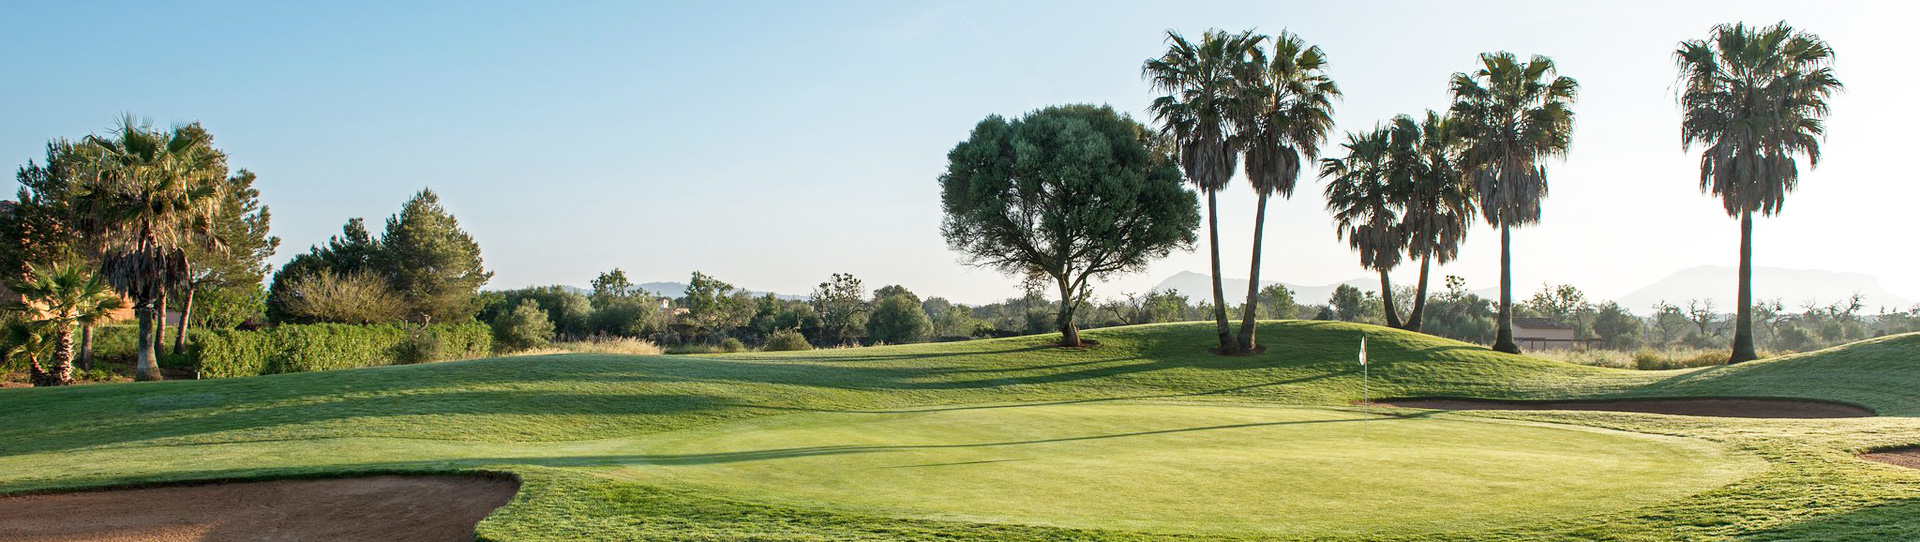 Spain golf courses - Son Antem Golf Course East - Photo 3